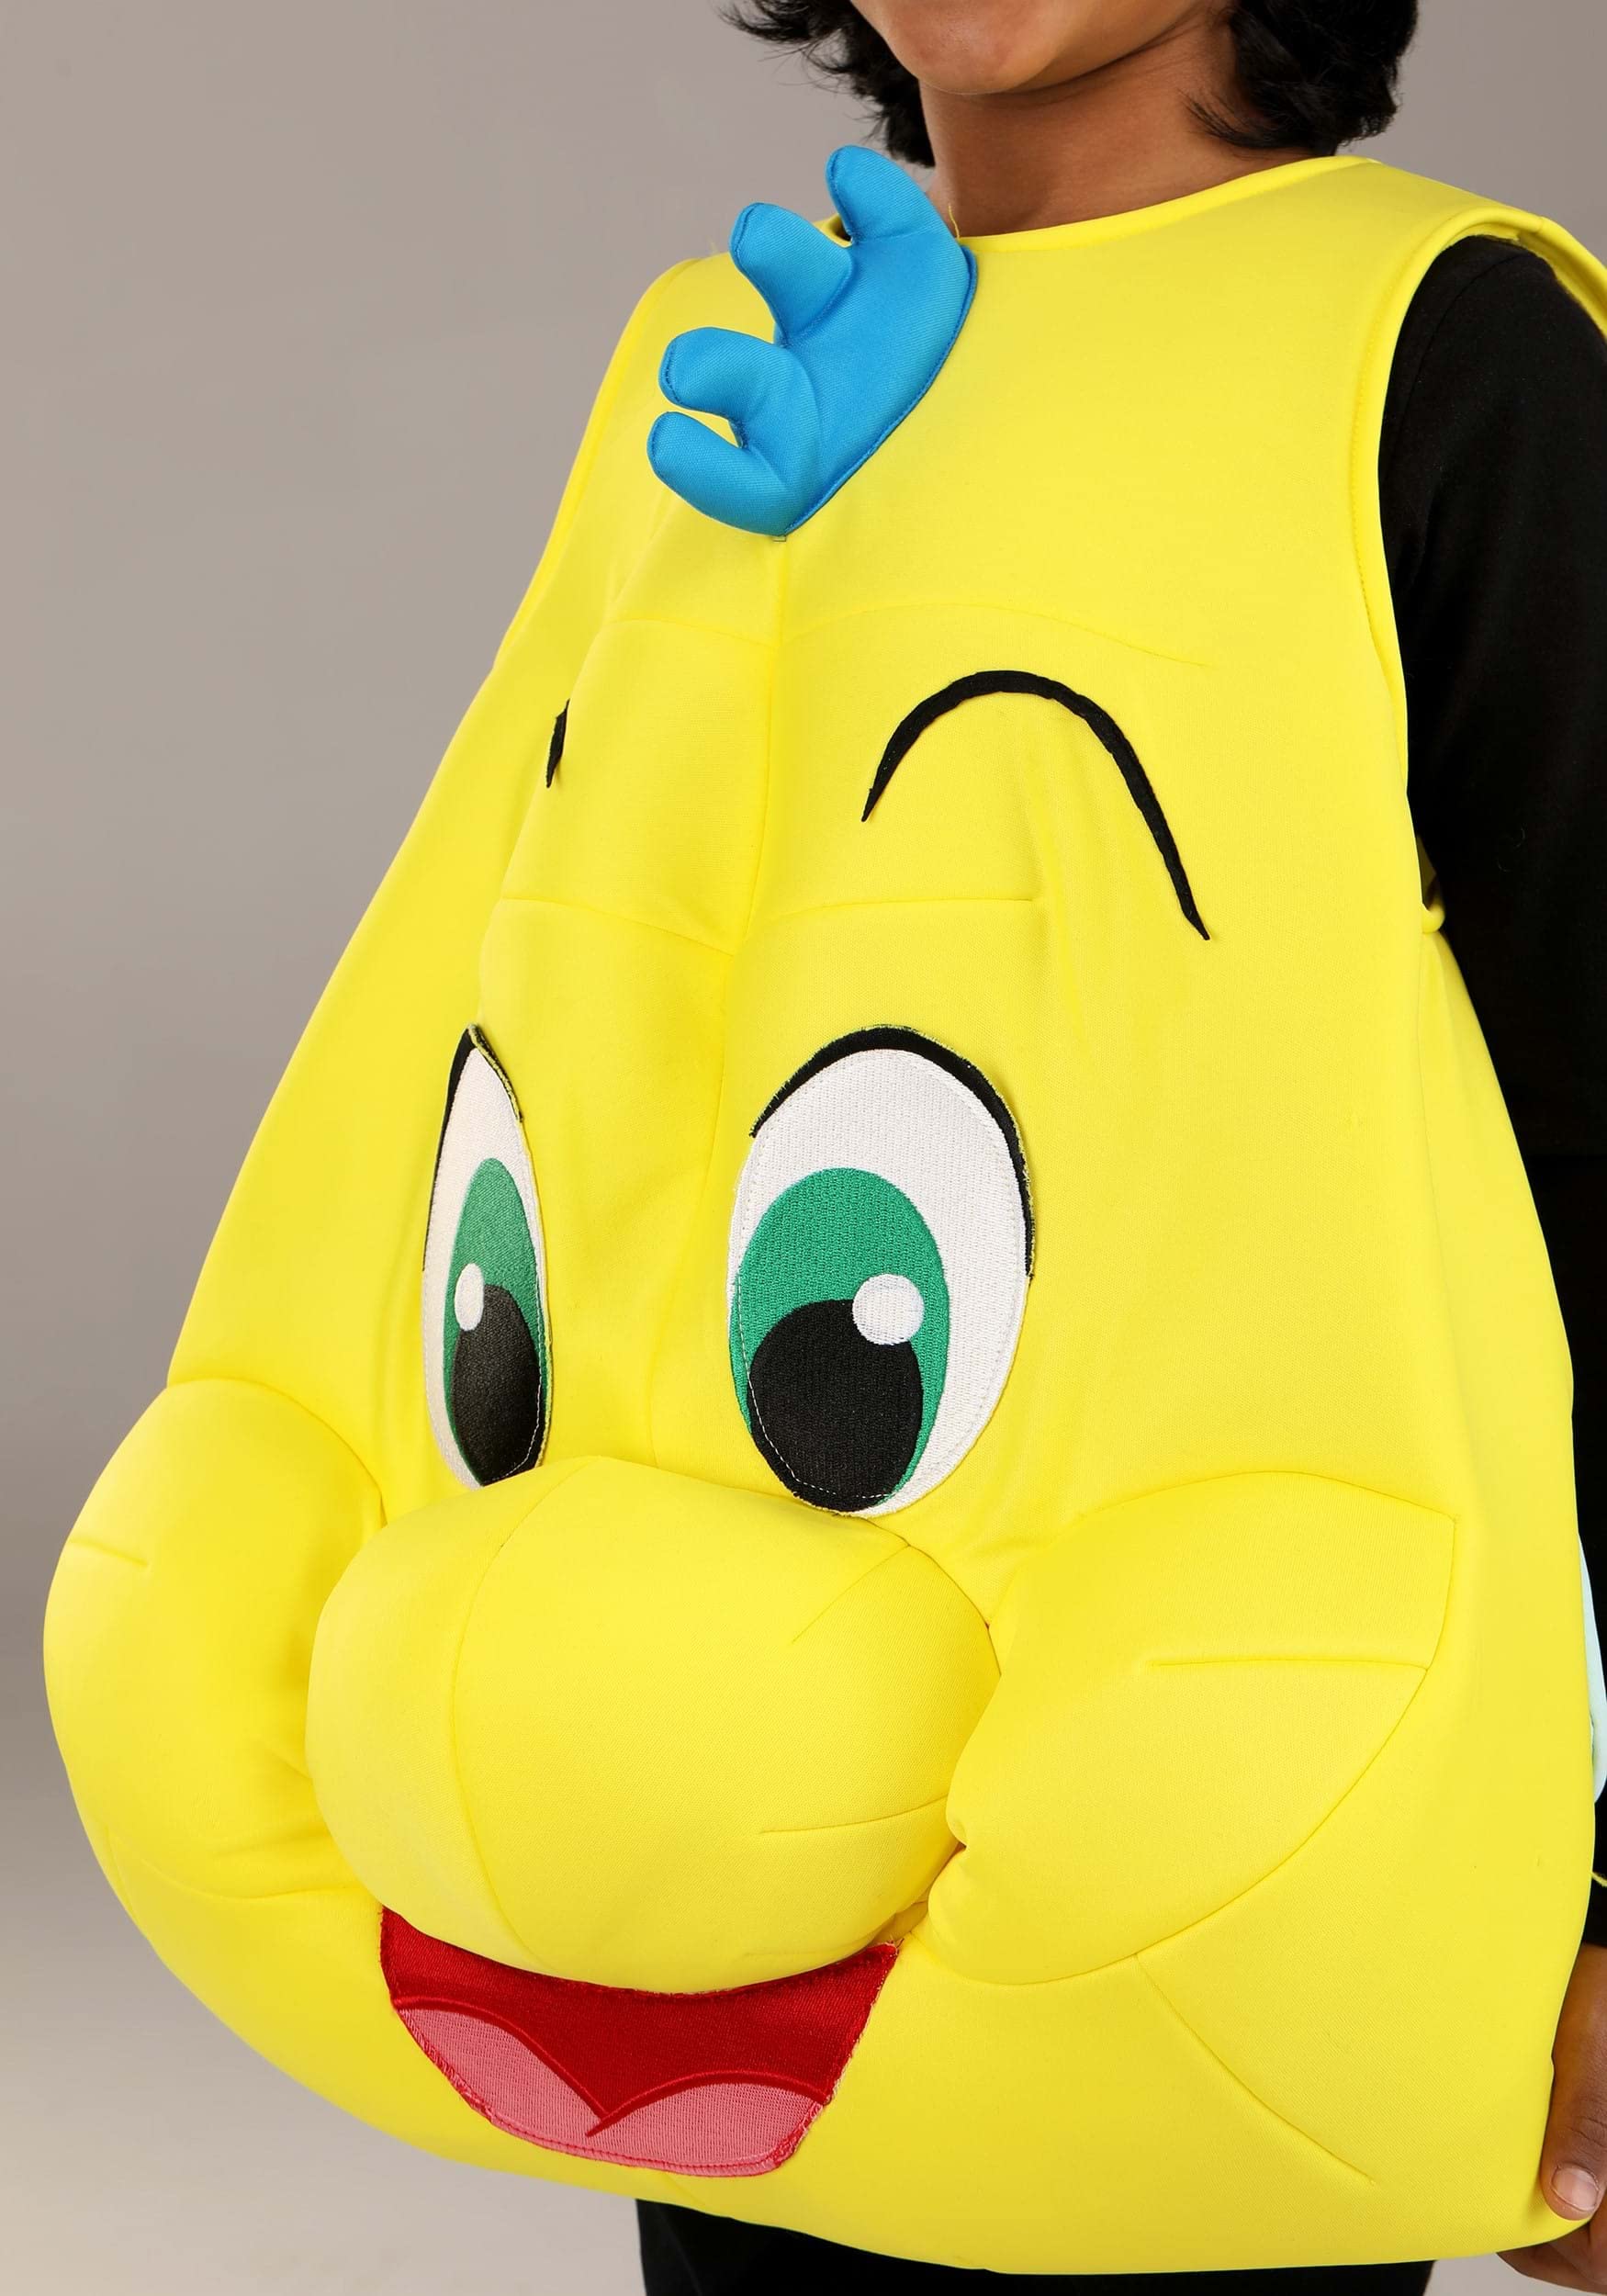 Disney's The Little Mermaid Flounder Costume for Kids, Yellow Plush Tropical Fish Tunic